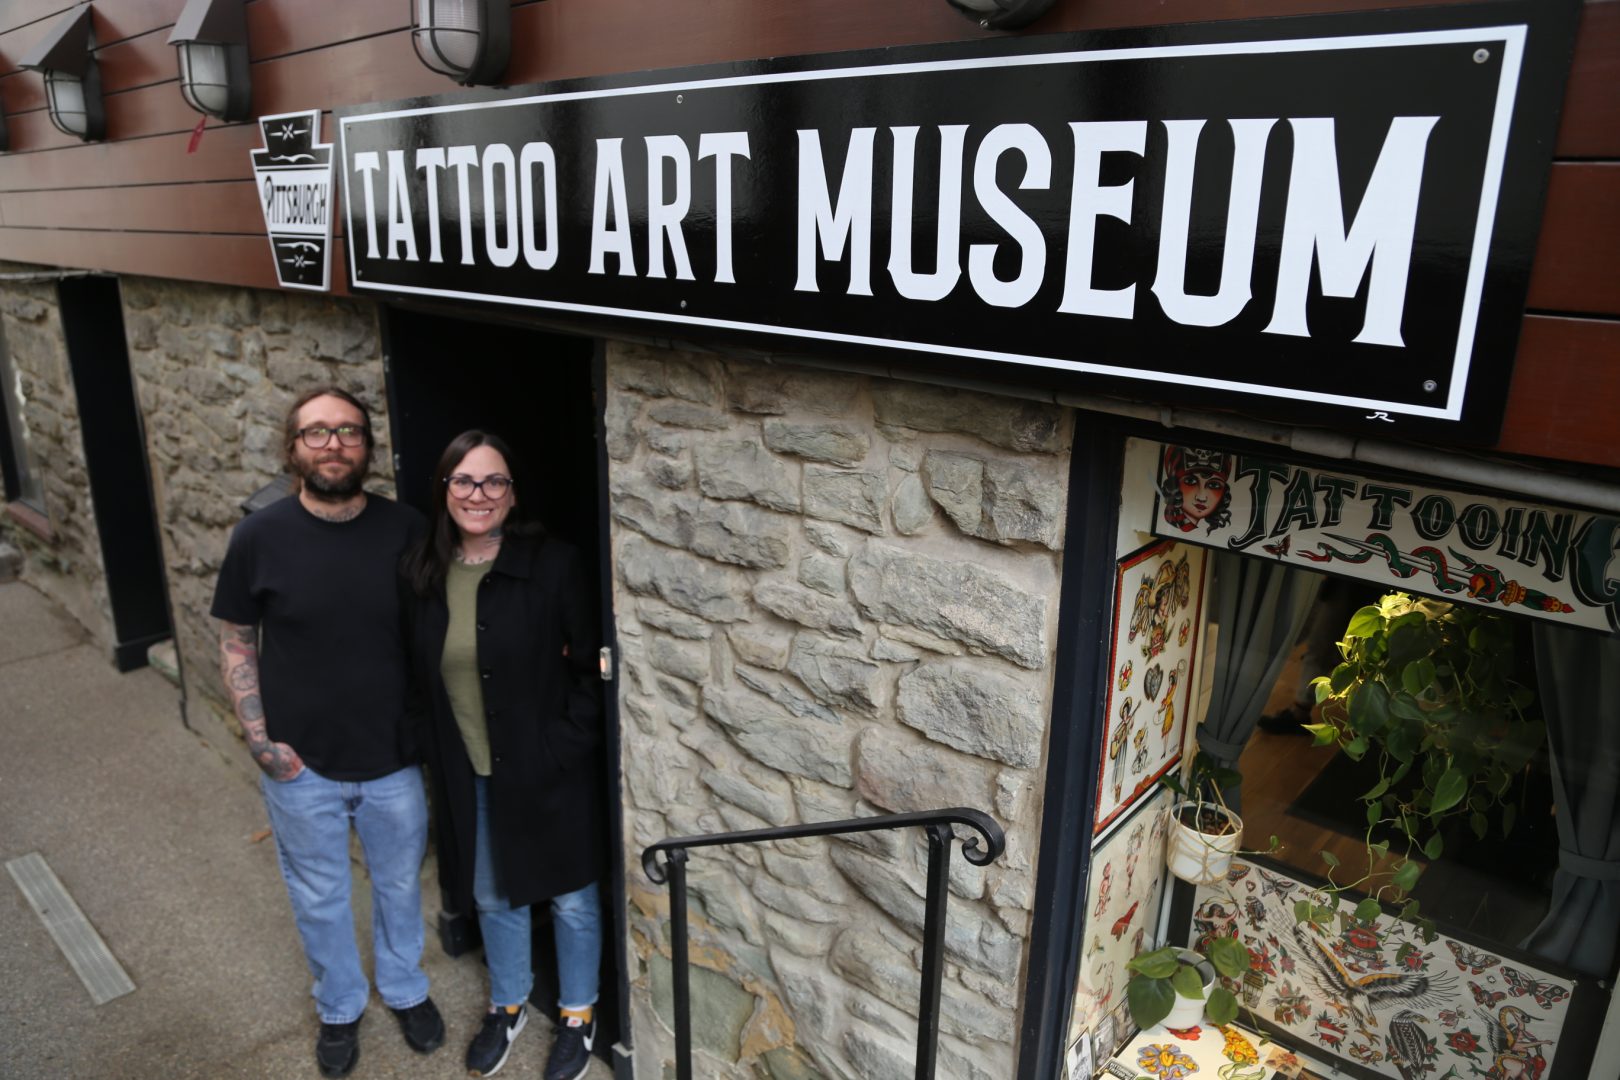 Veteran tattooers Nick Ackman and Jill Krzanric operate the Pittsburgh Tattoo Art Museum in Shadyside. 